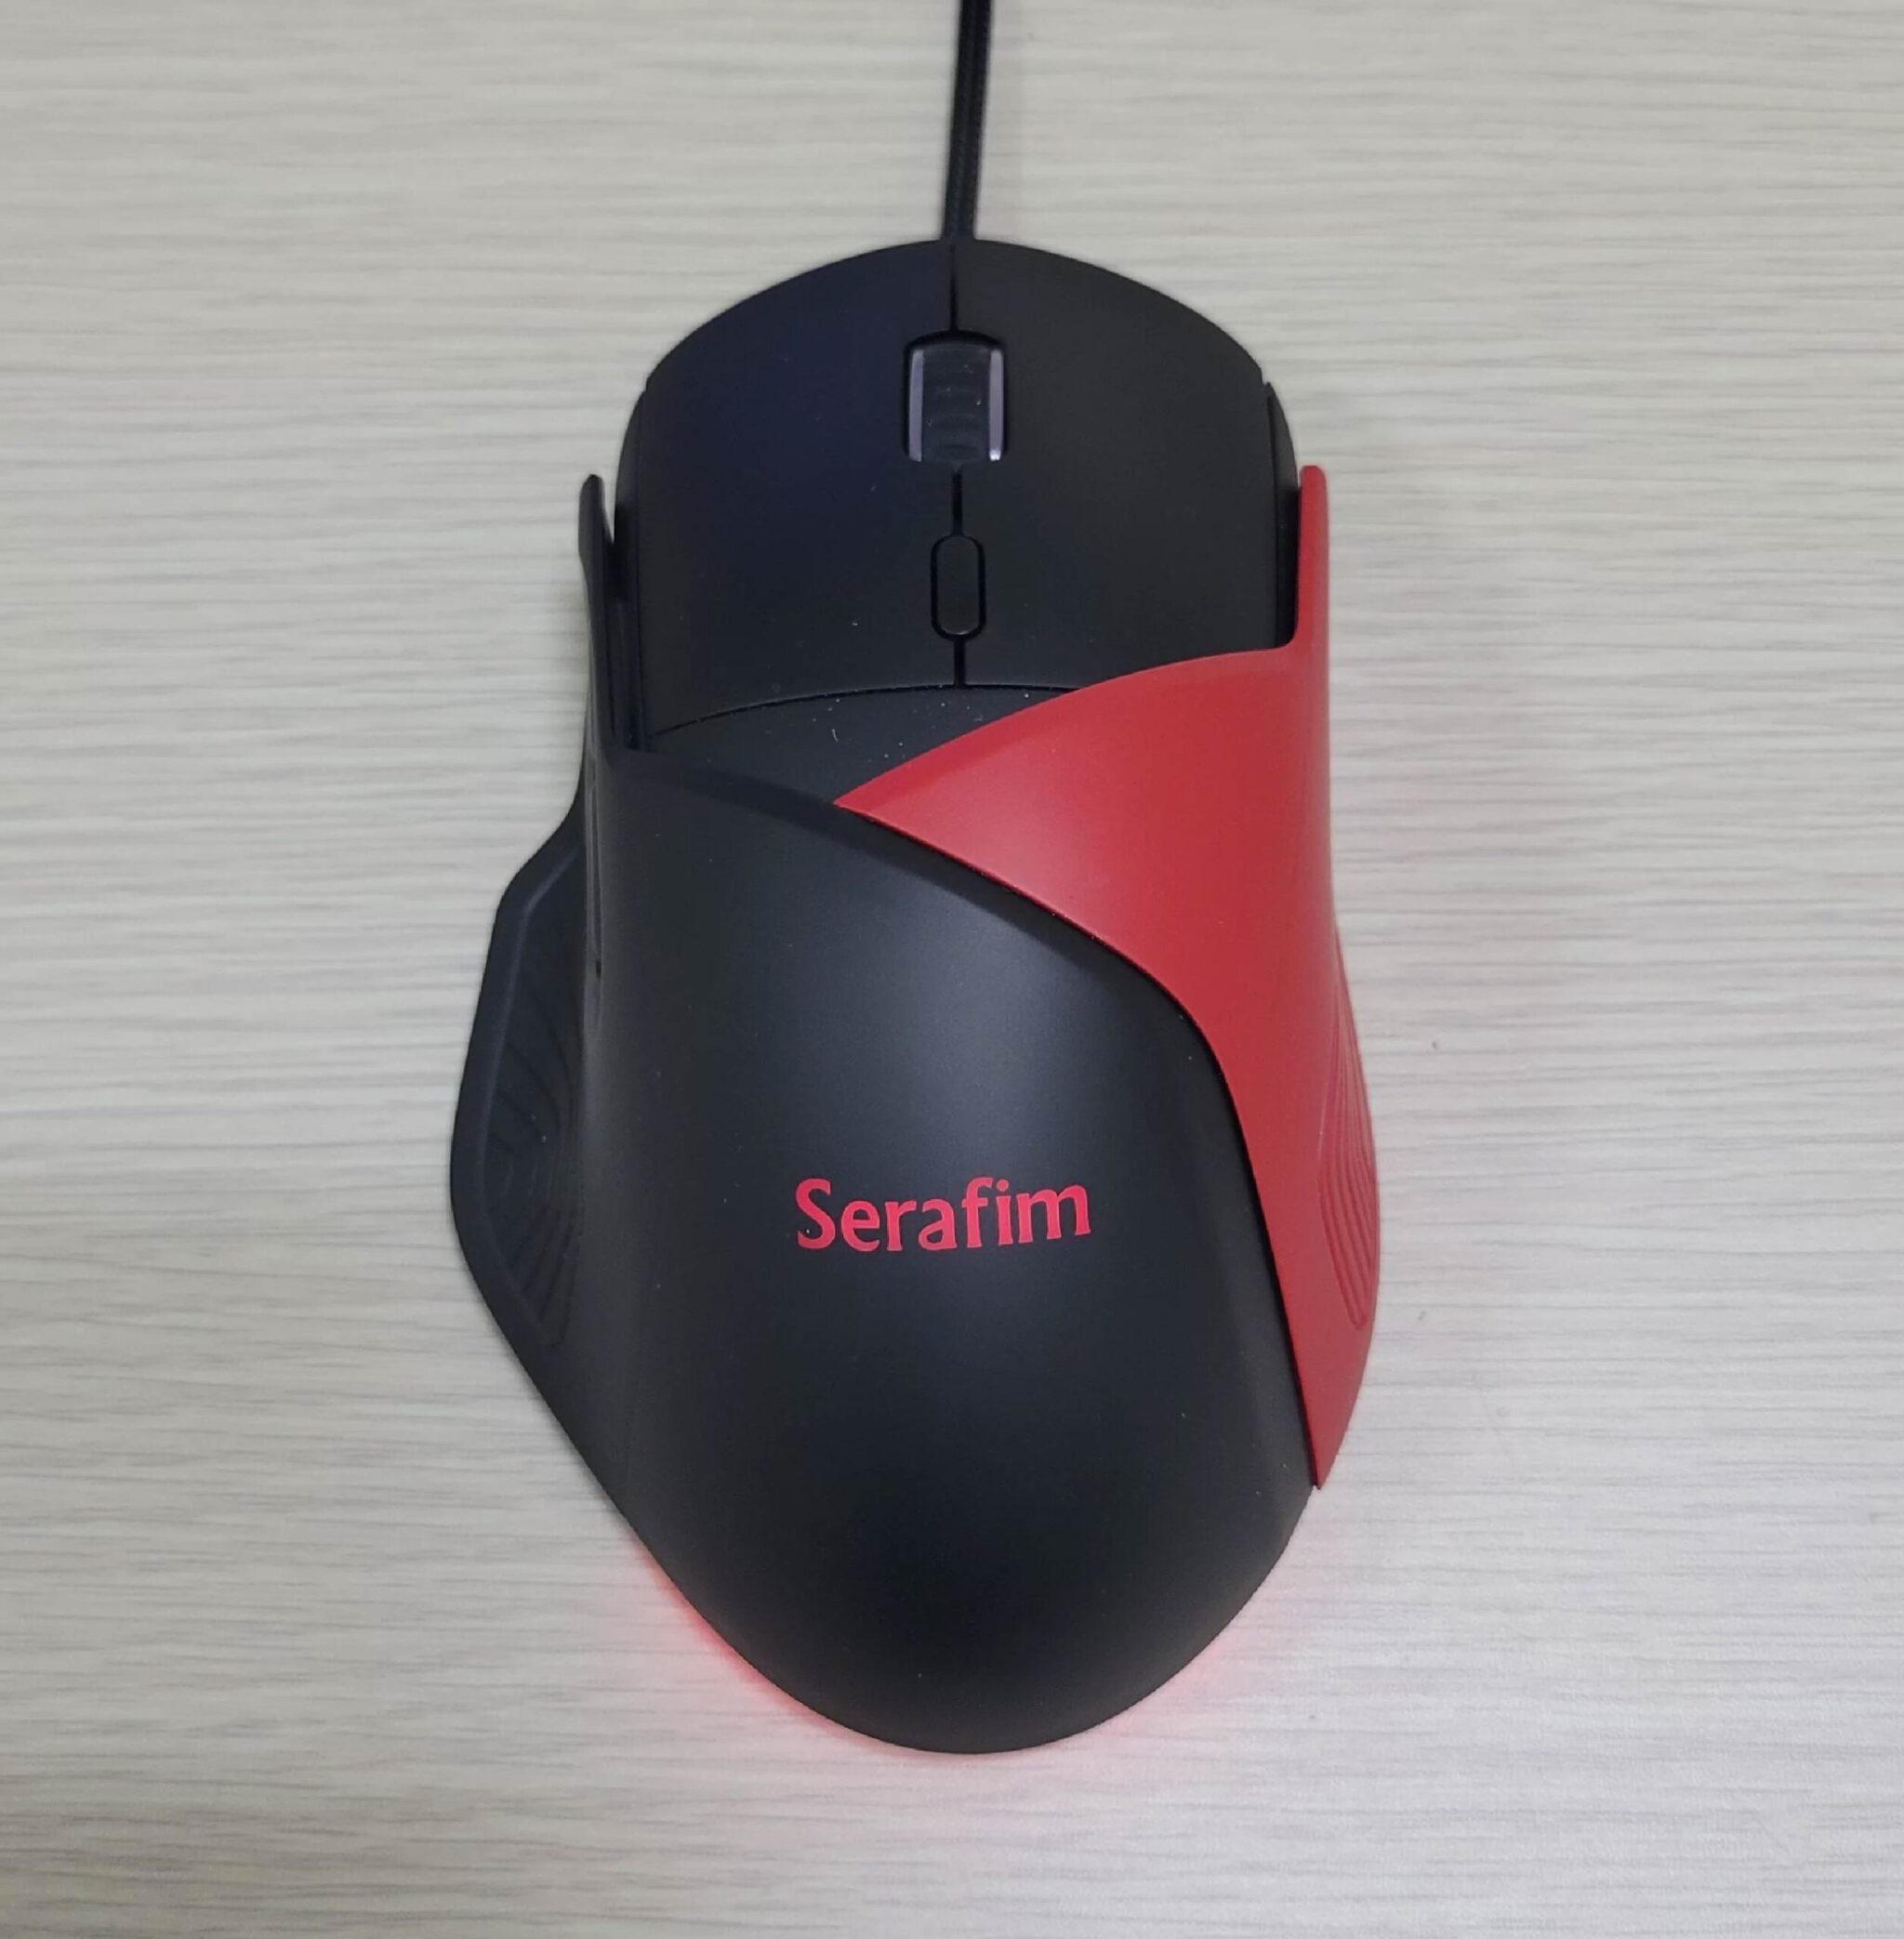 Serafim M1 變形滑鼠外觀